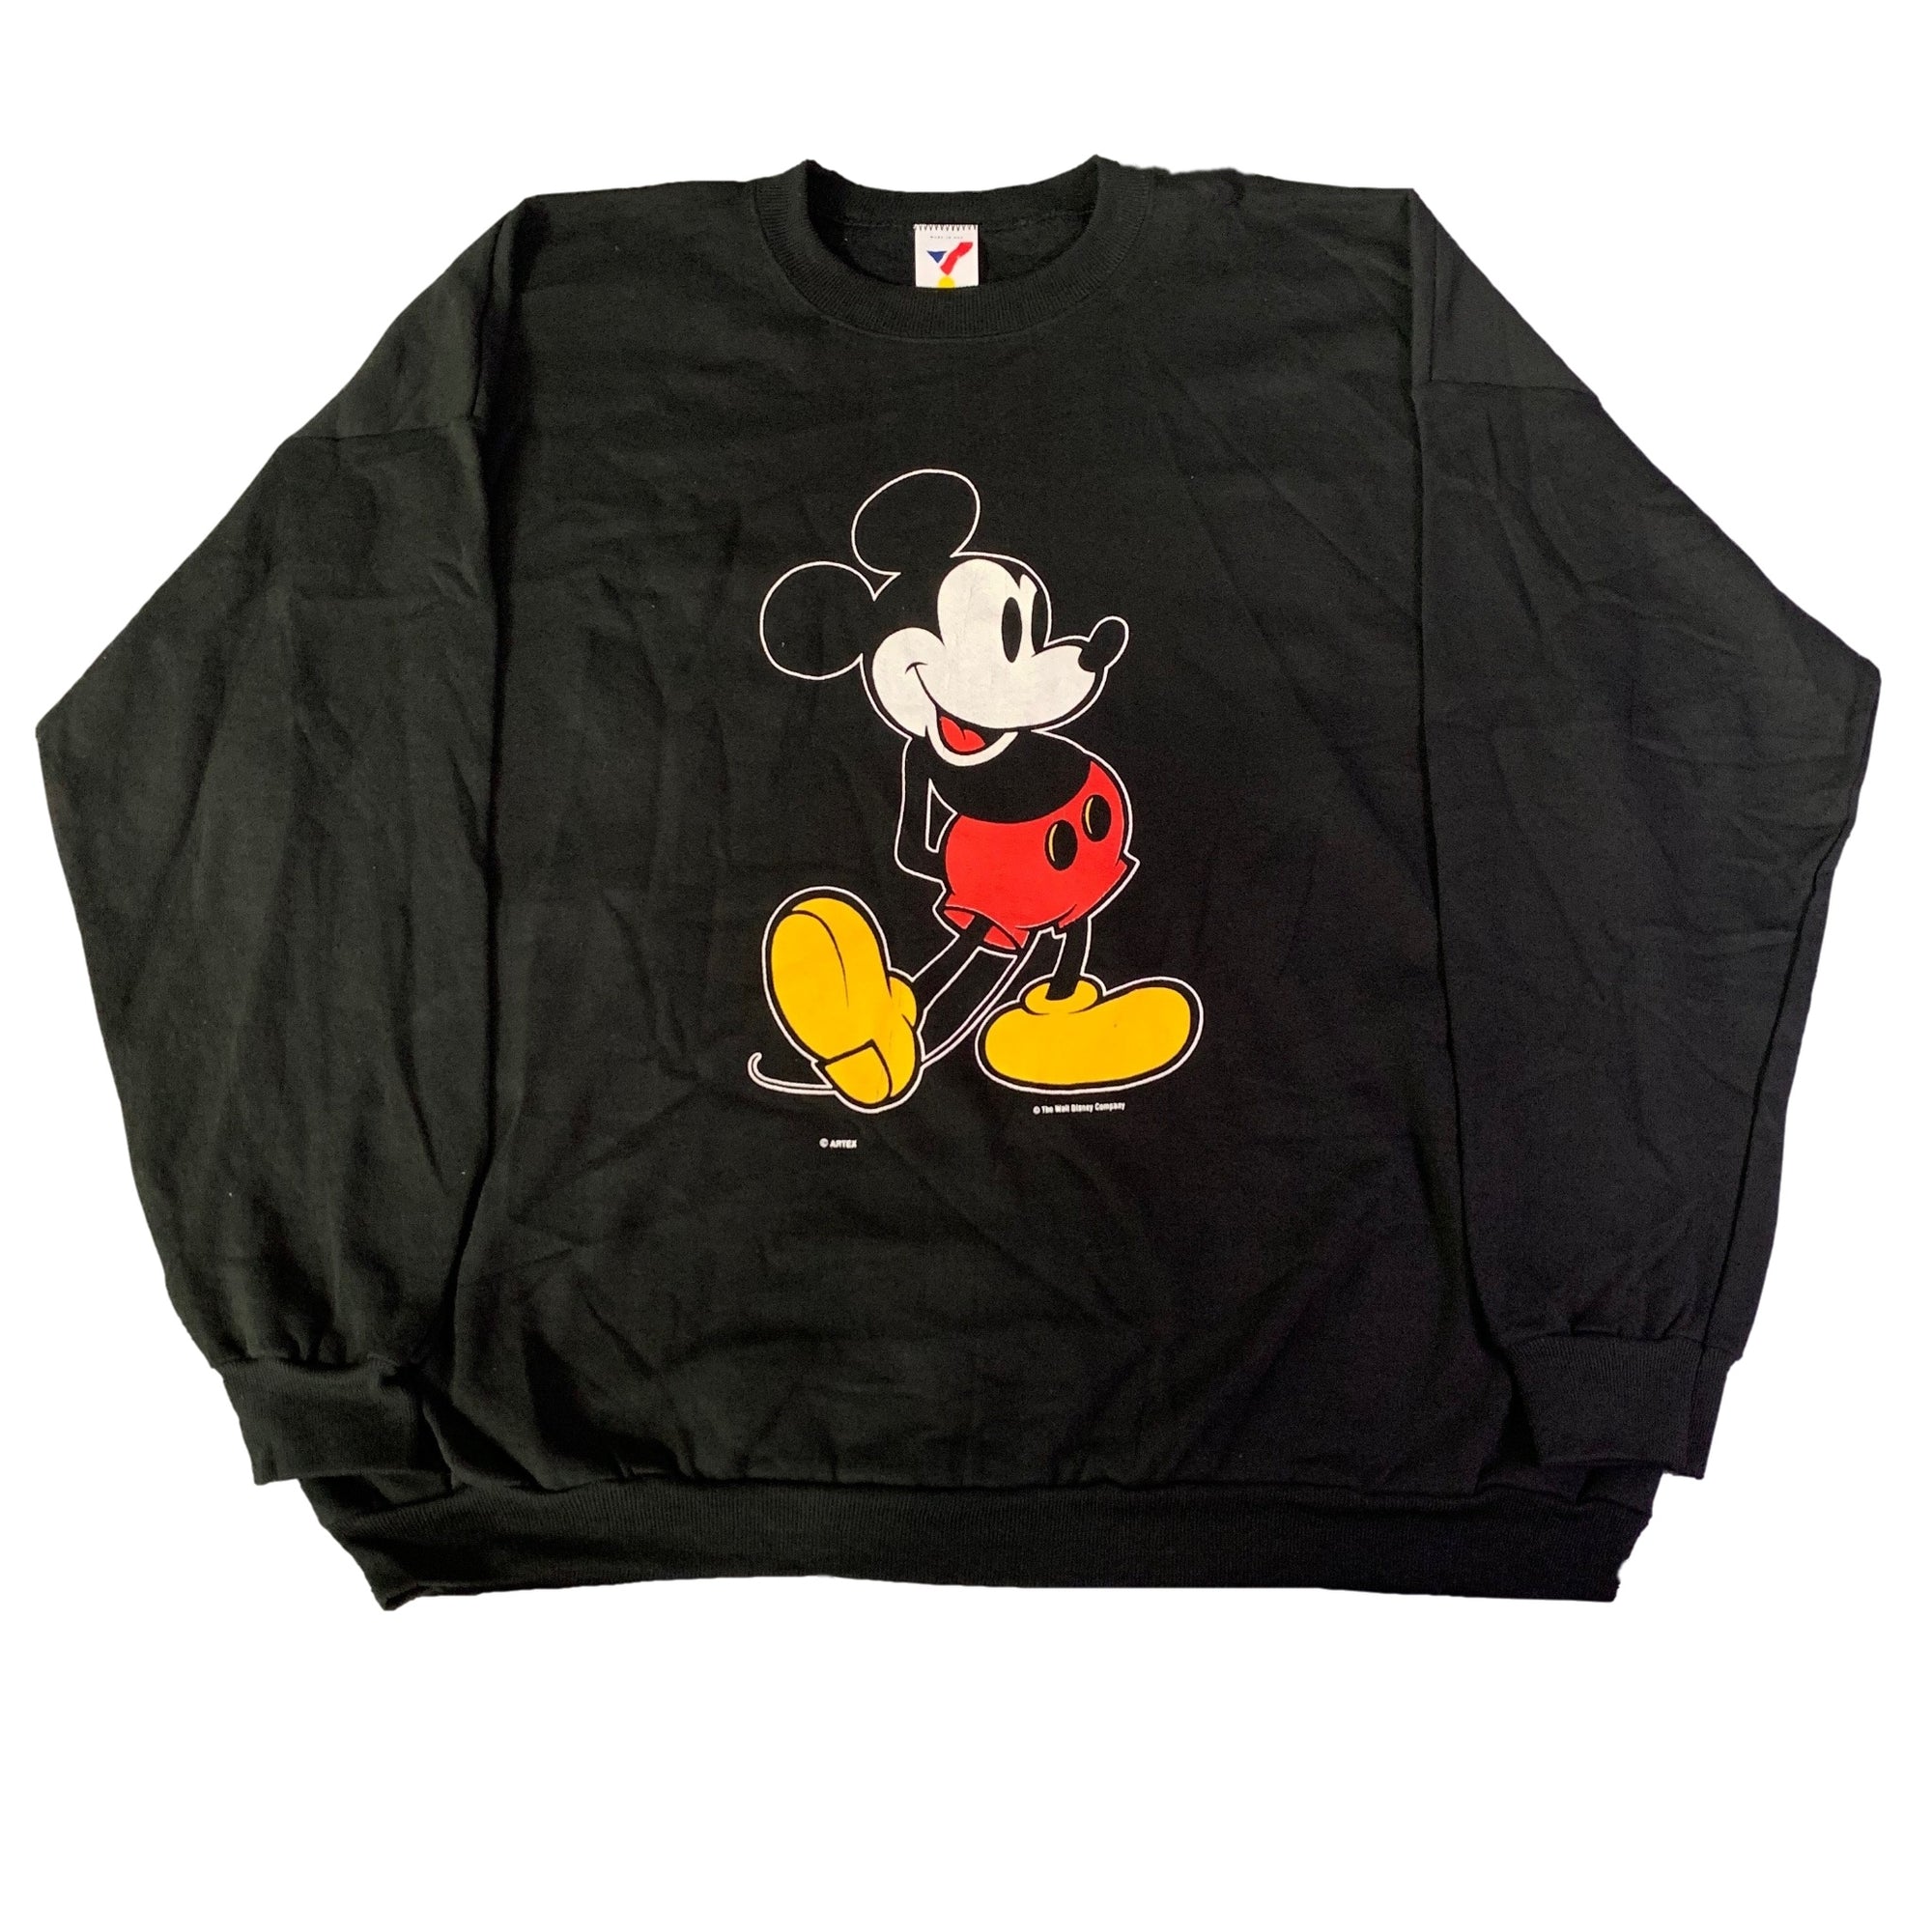 Vintage Mickey Mouse "Artex" Crewneck Sweatshirt - jointcustodydc